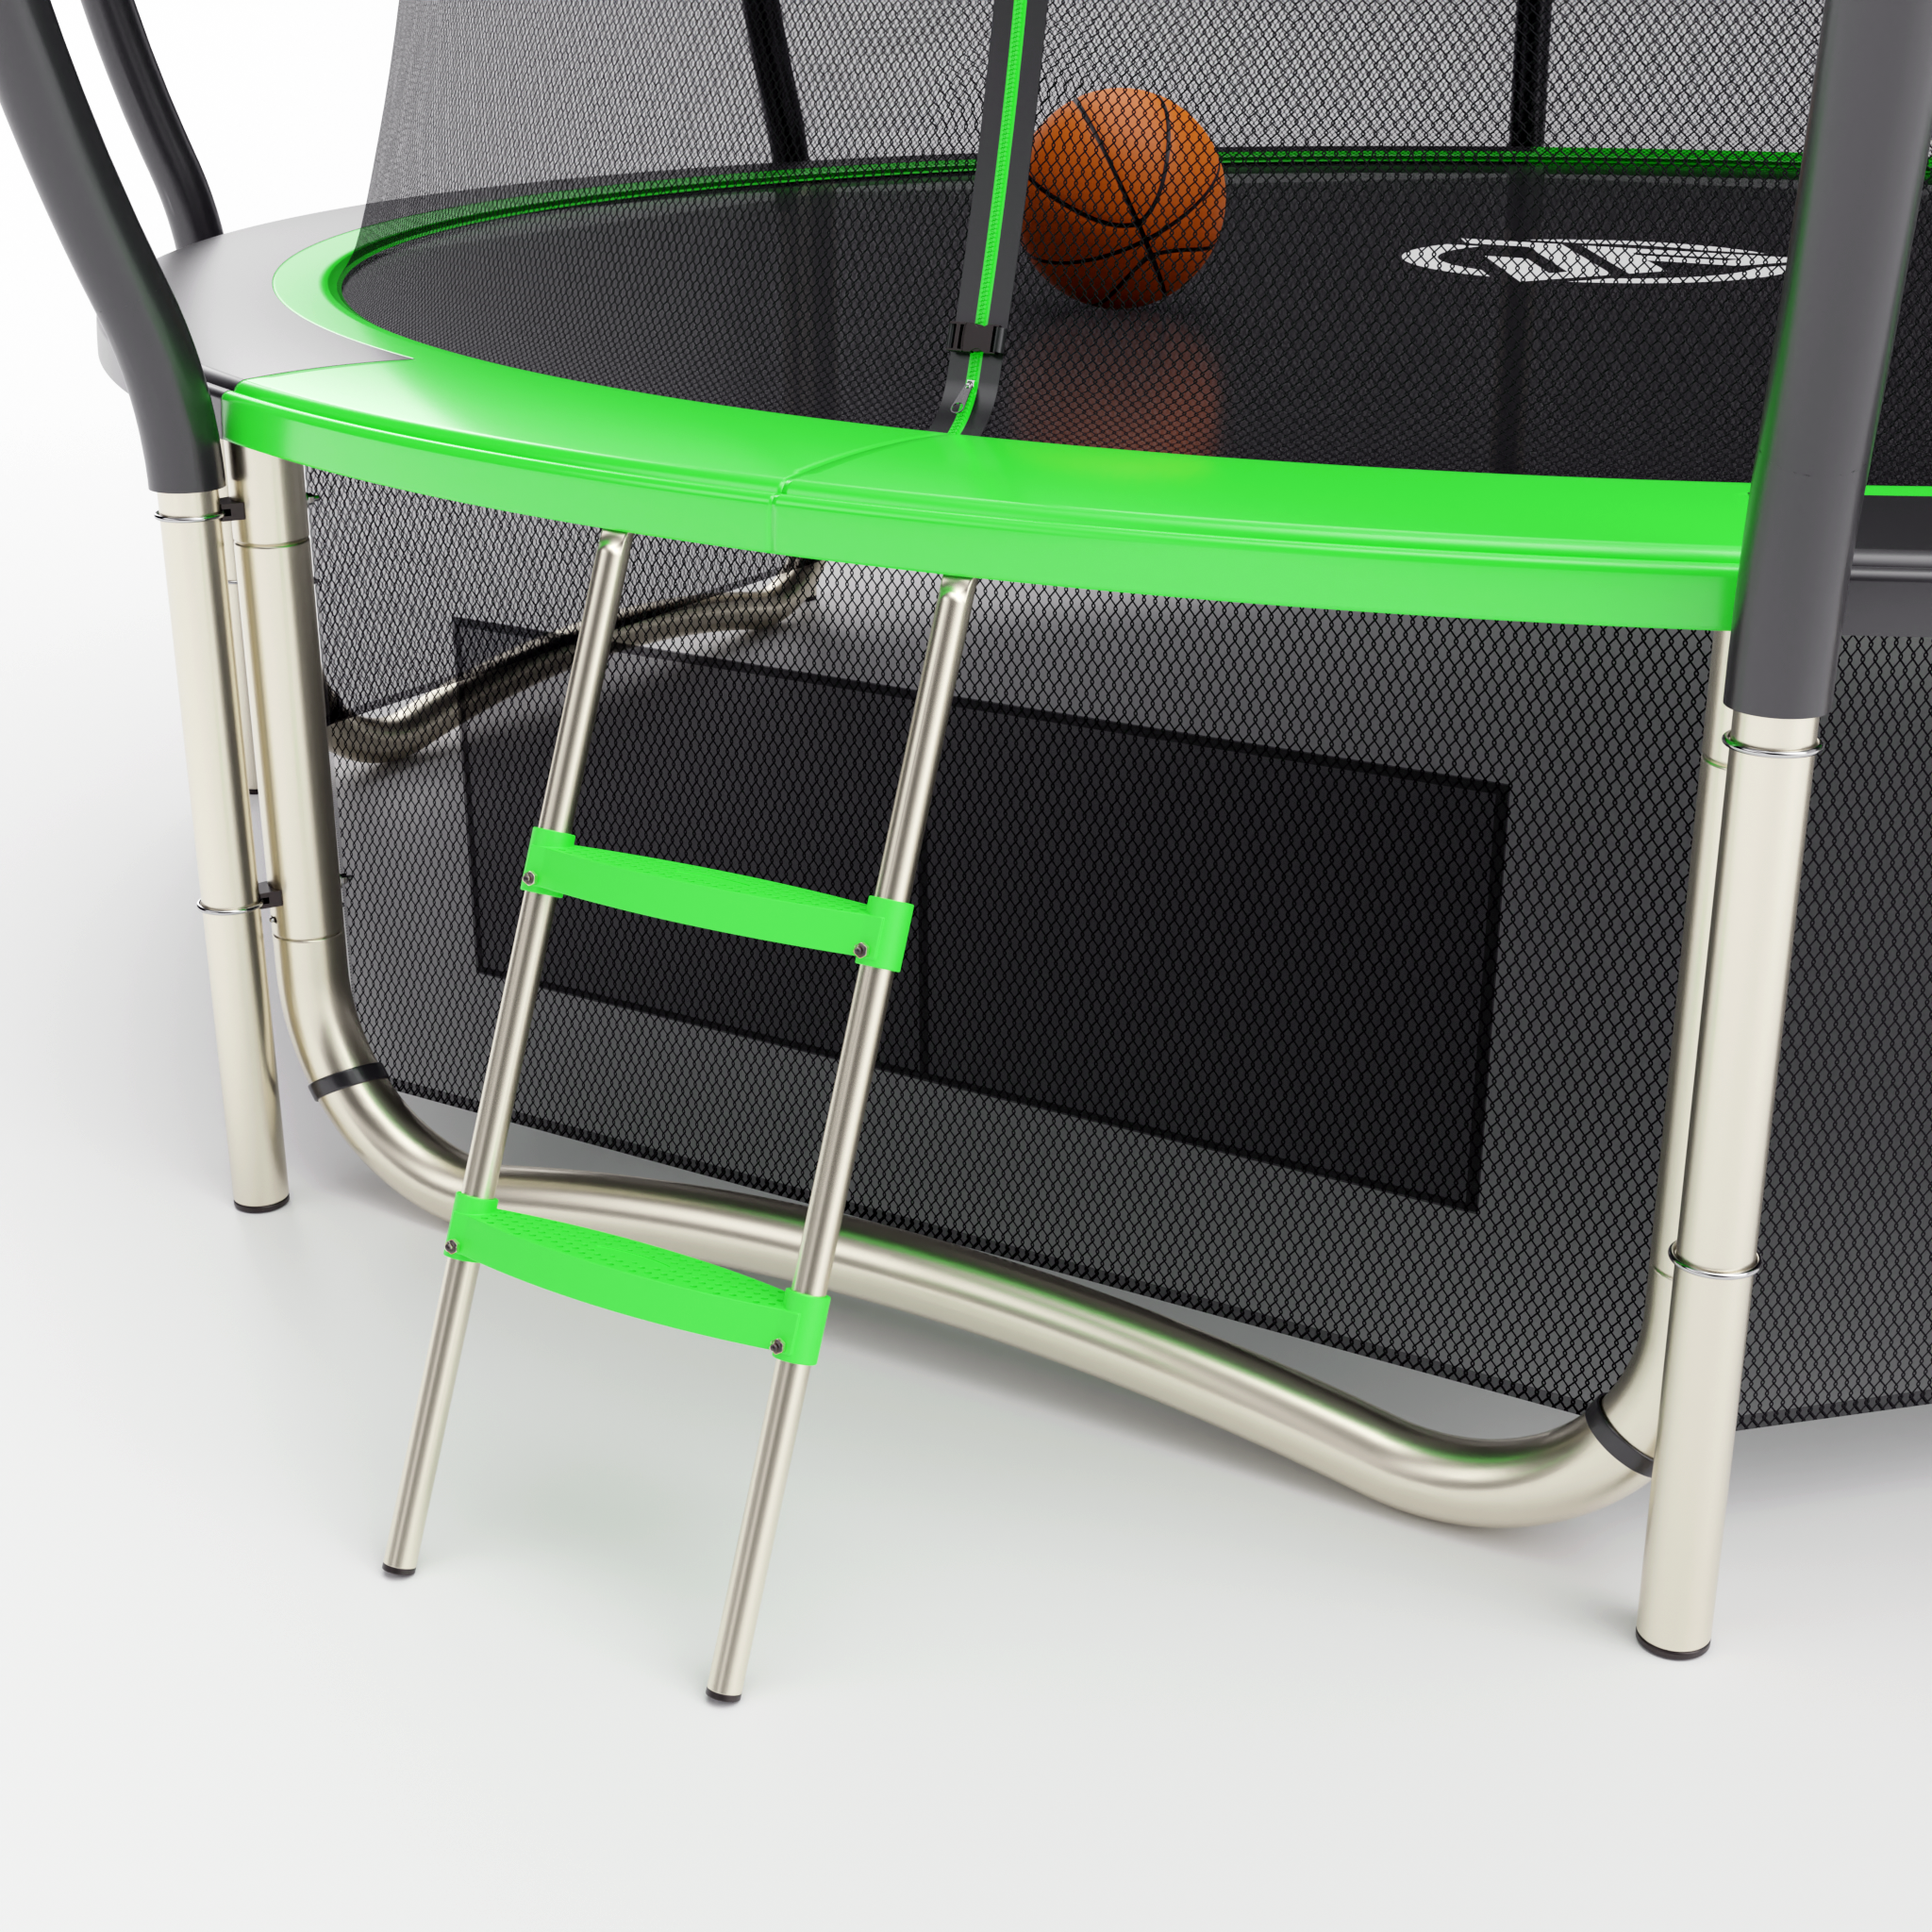 Фото 18 - Батут Jump Power 8 ft Pro Inside Basket Green.